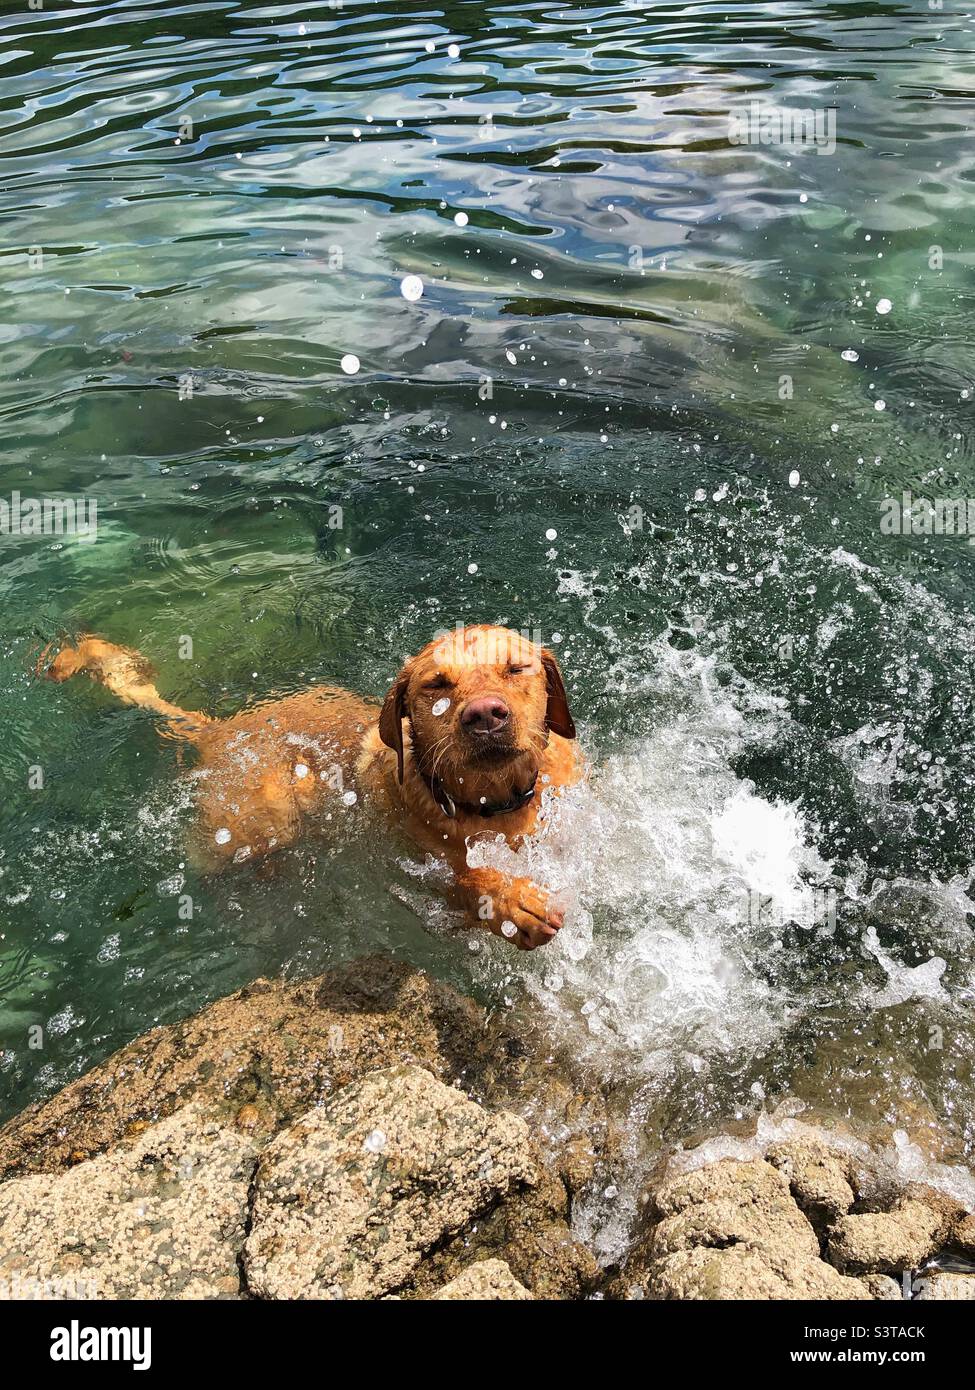 Pet Labrador retriever dog splashing and swimming in water Stock Photo